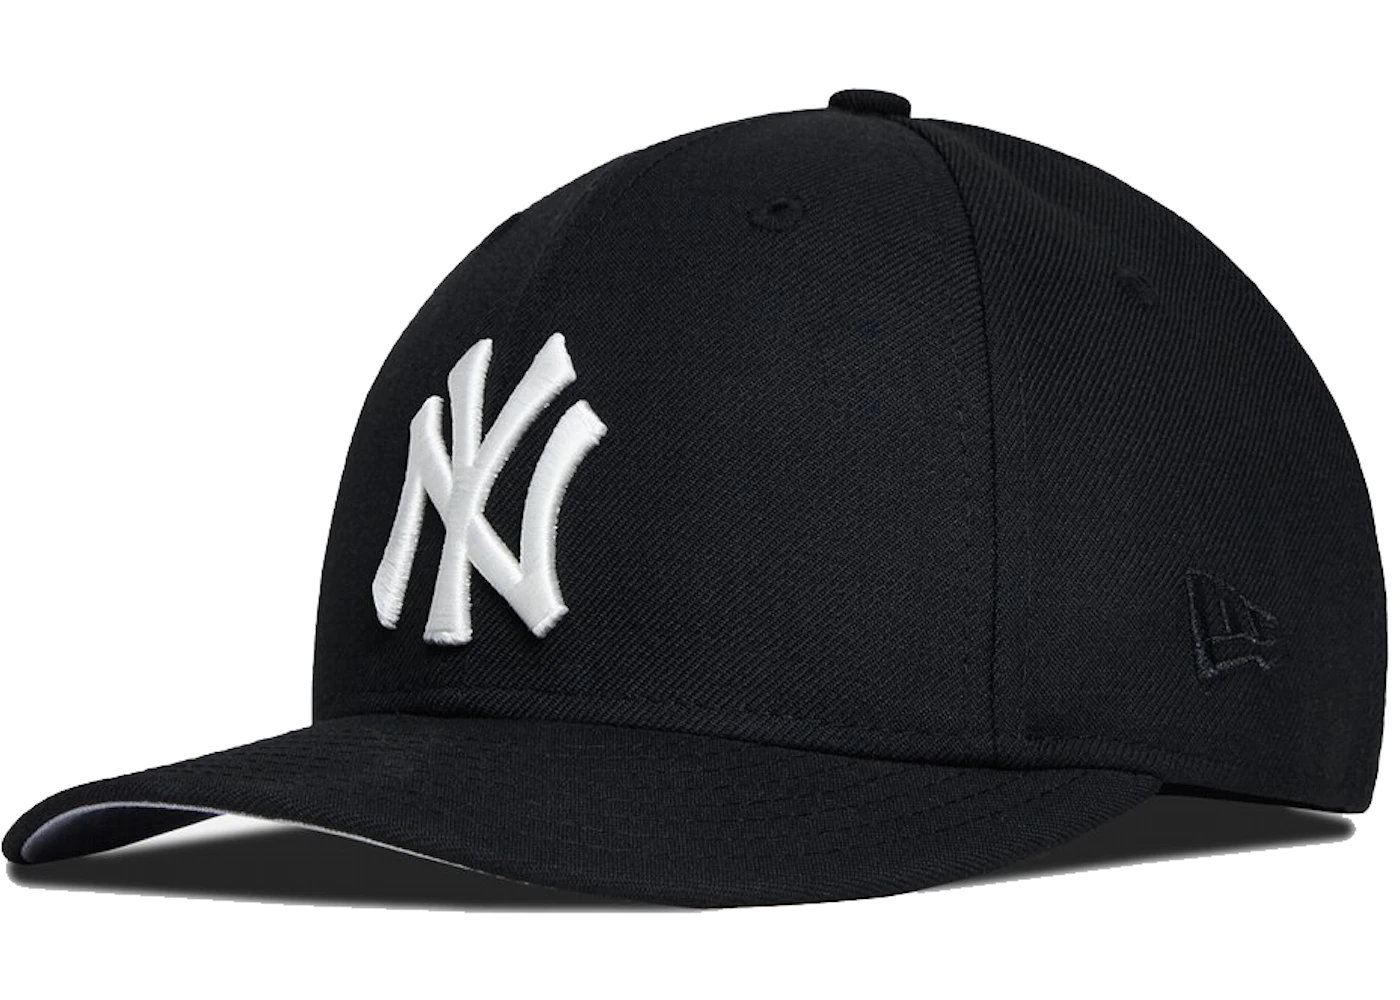 Kith x New Era Low Prof 59Fifty Yankees Cap Black - SS20